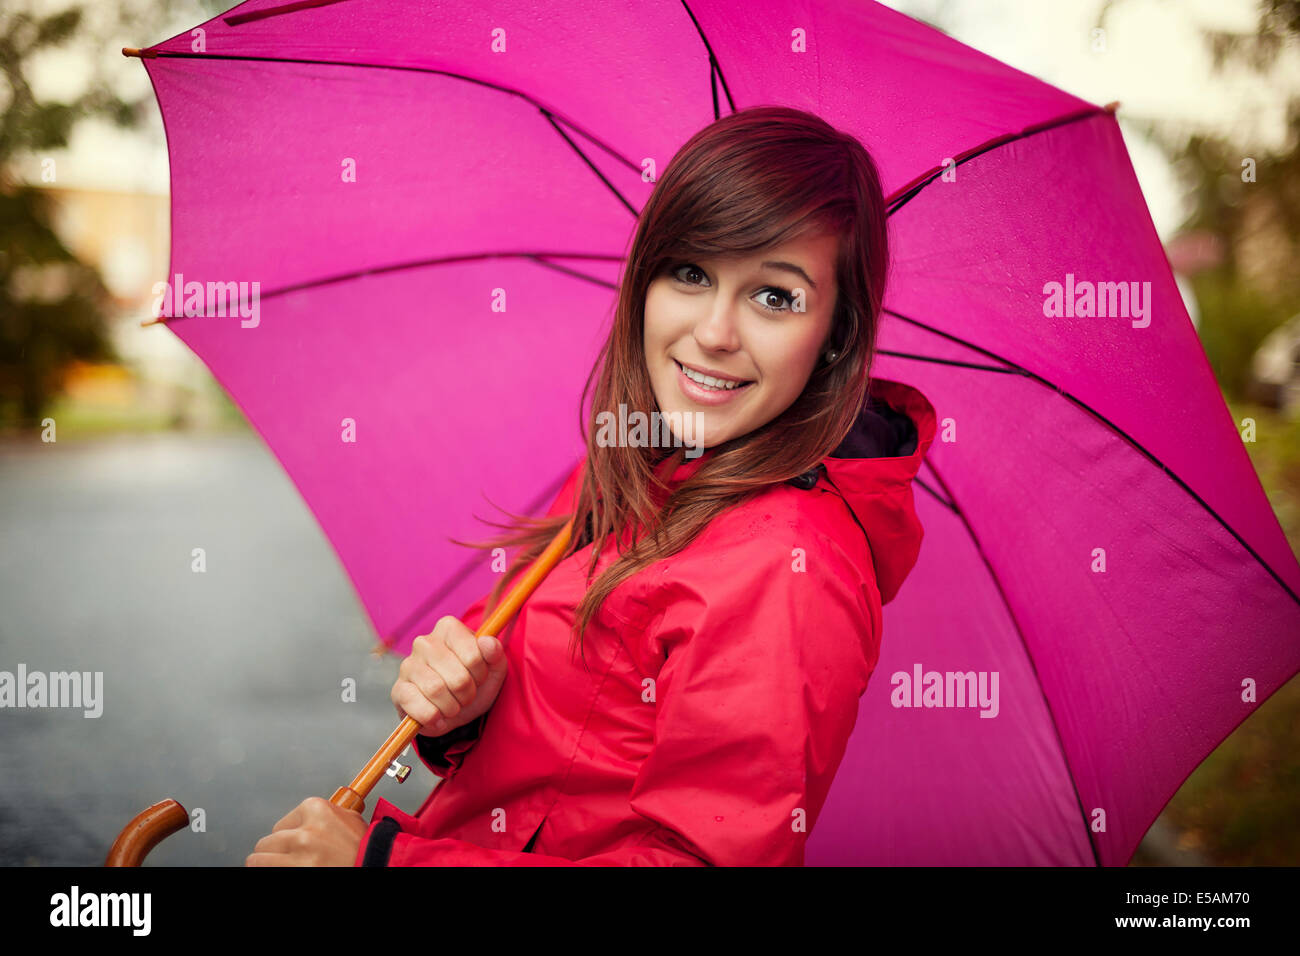 Portrait of young woman with umbrella, Debica, Poland Stock Photo